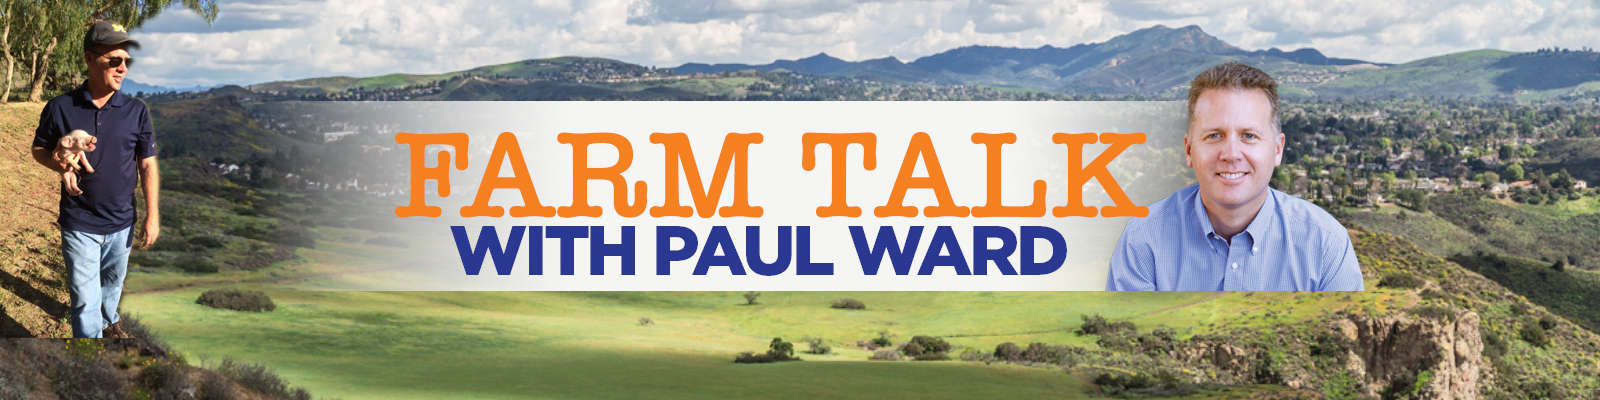 Farm Talk with Paul Ward